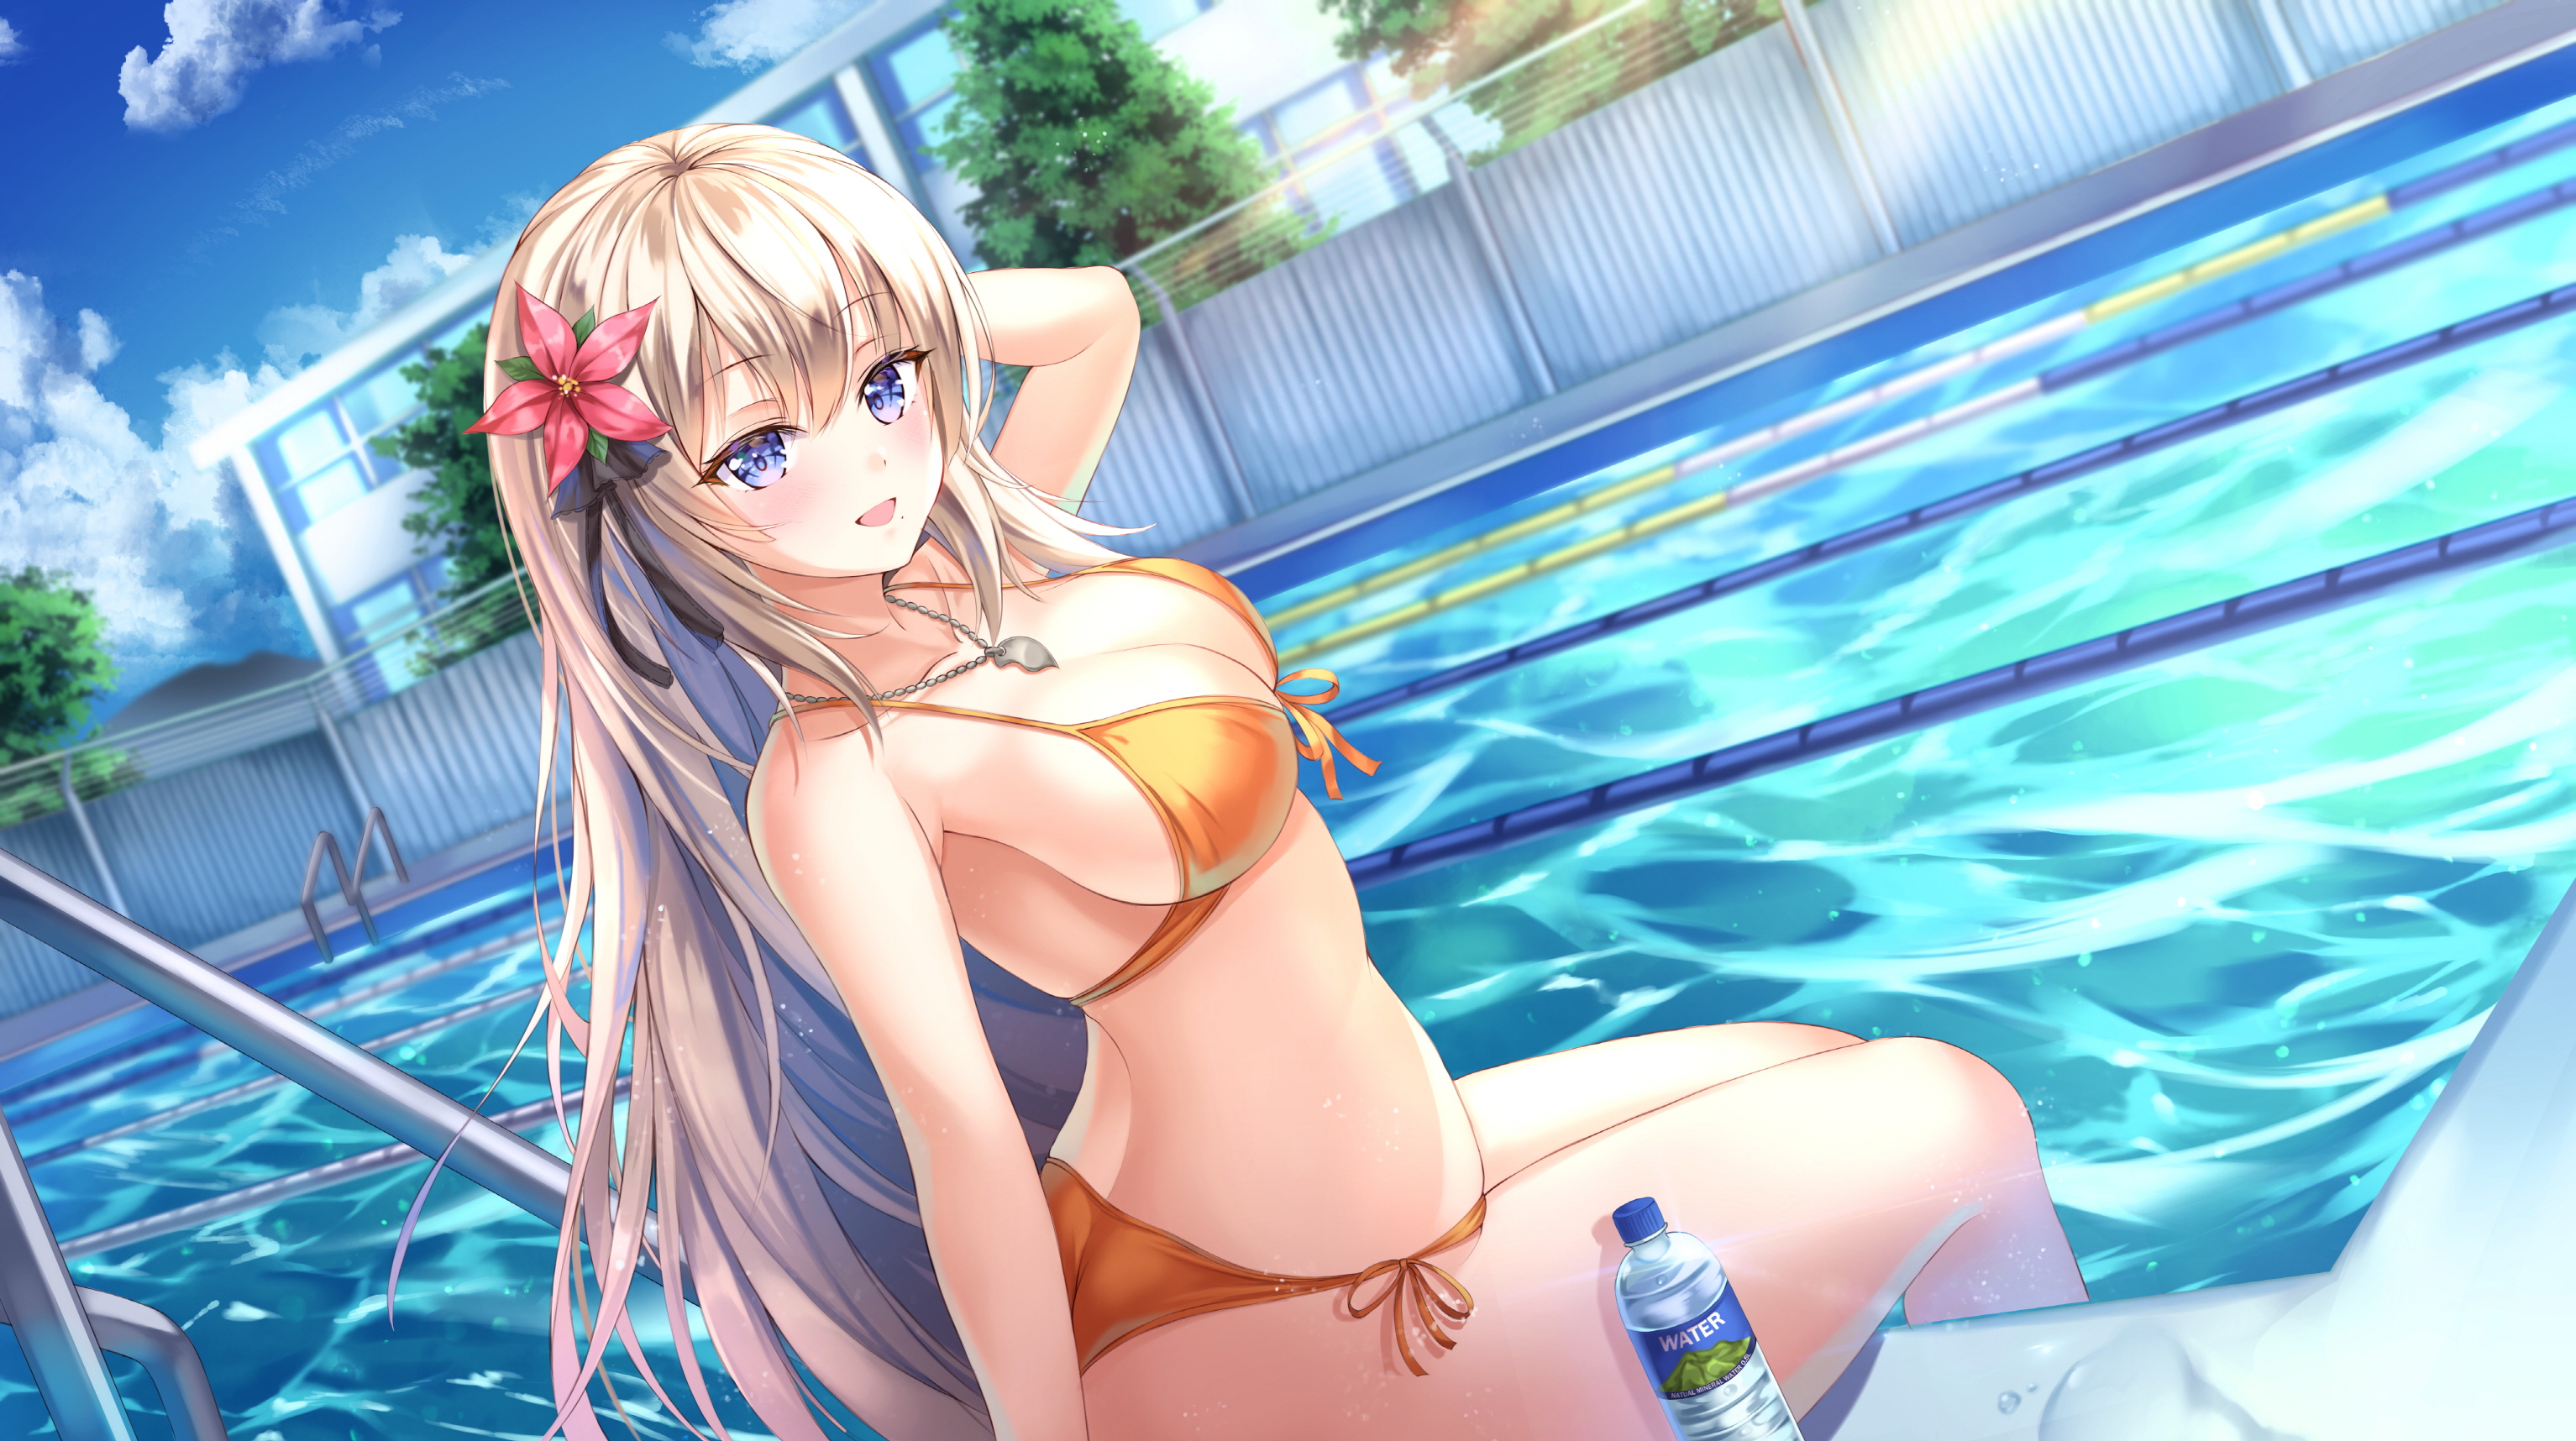 Anime 3067x1716 Bnari anime anime girls bikini swimming pool sideboob big boobs long hair blonde blue eyes